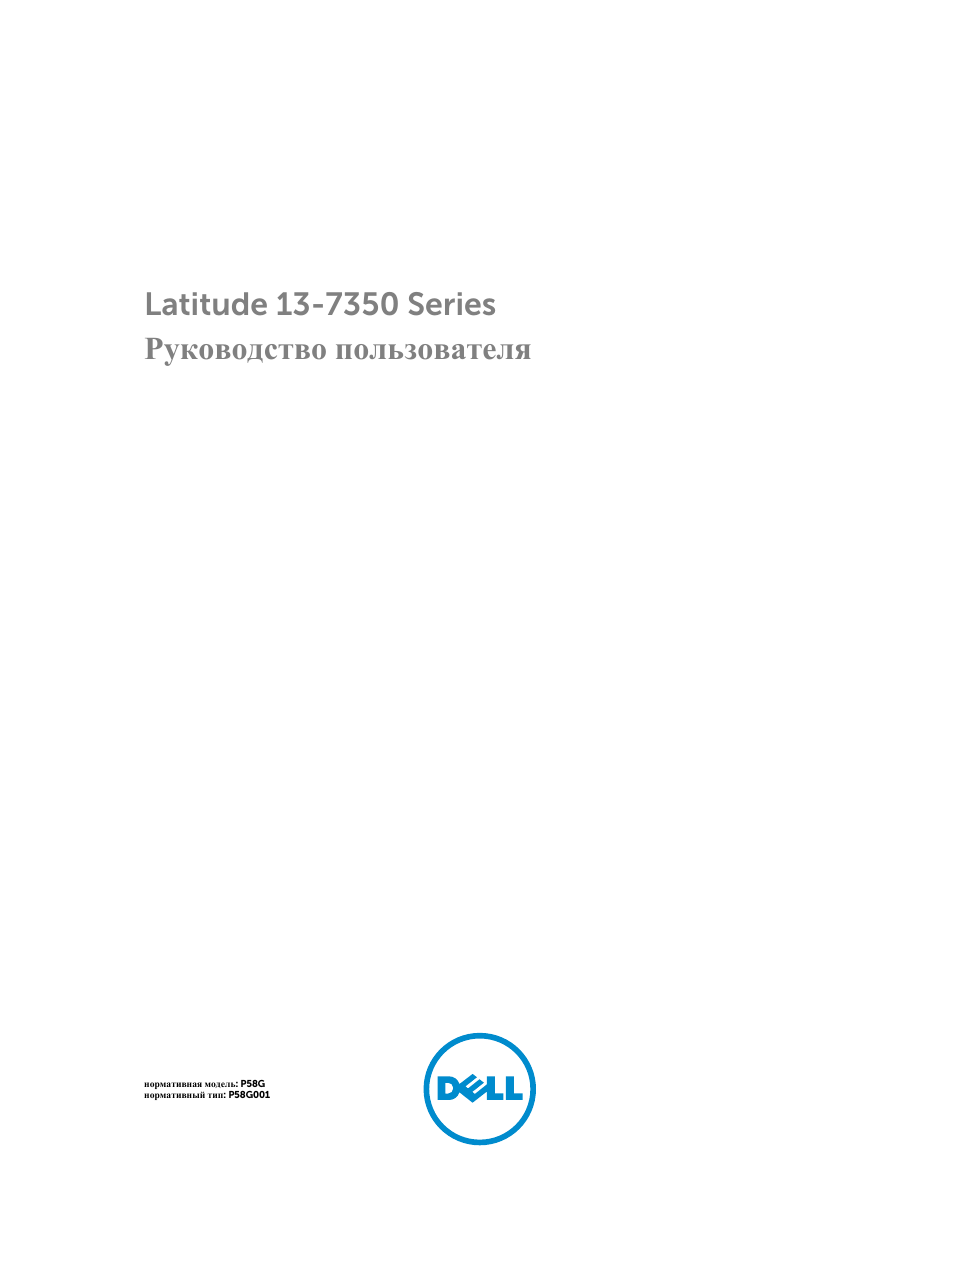 Инструкция по эксплуатации Dell Latitude 13 2-in-1 (7350, Late 2014) | 51 cтраница